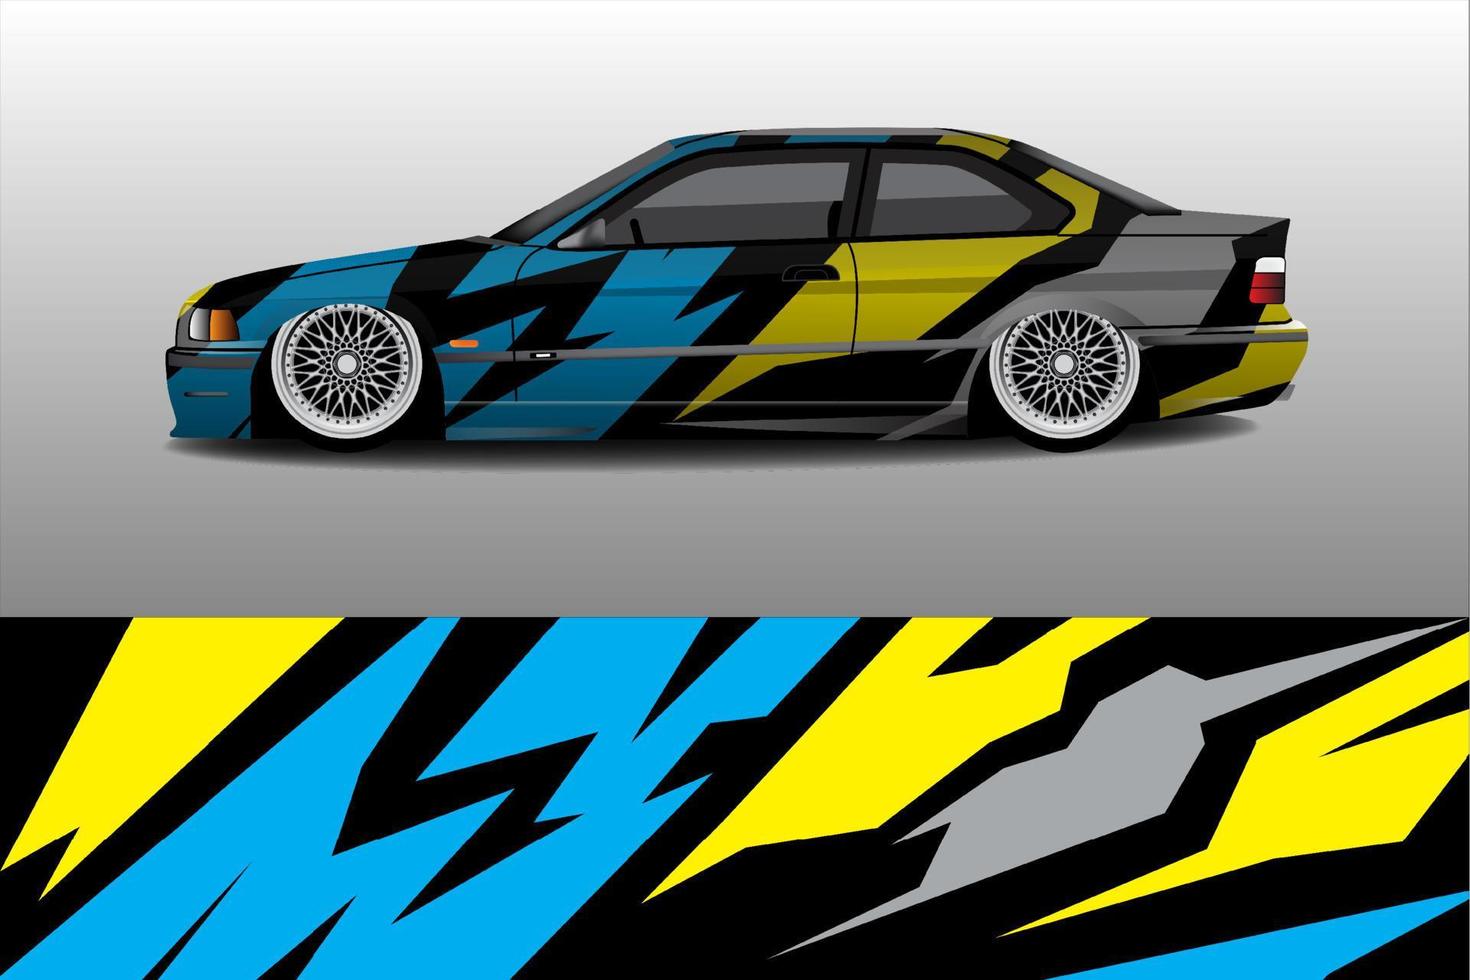 Race car livery design vector